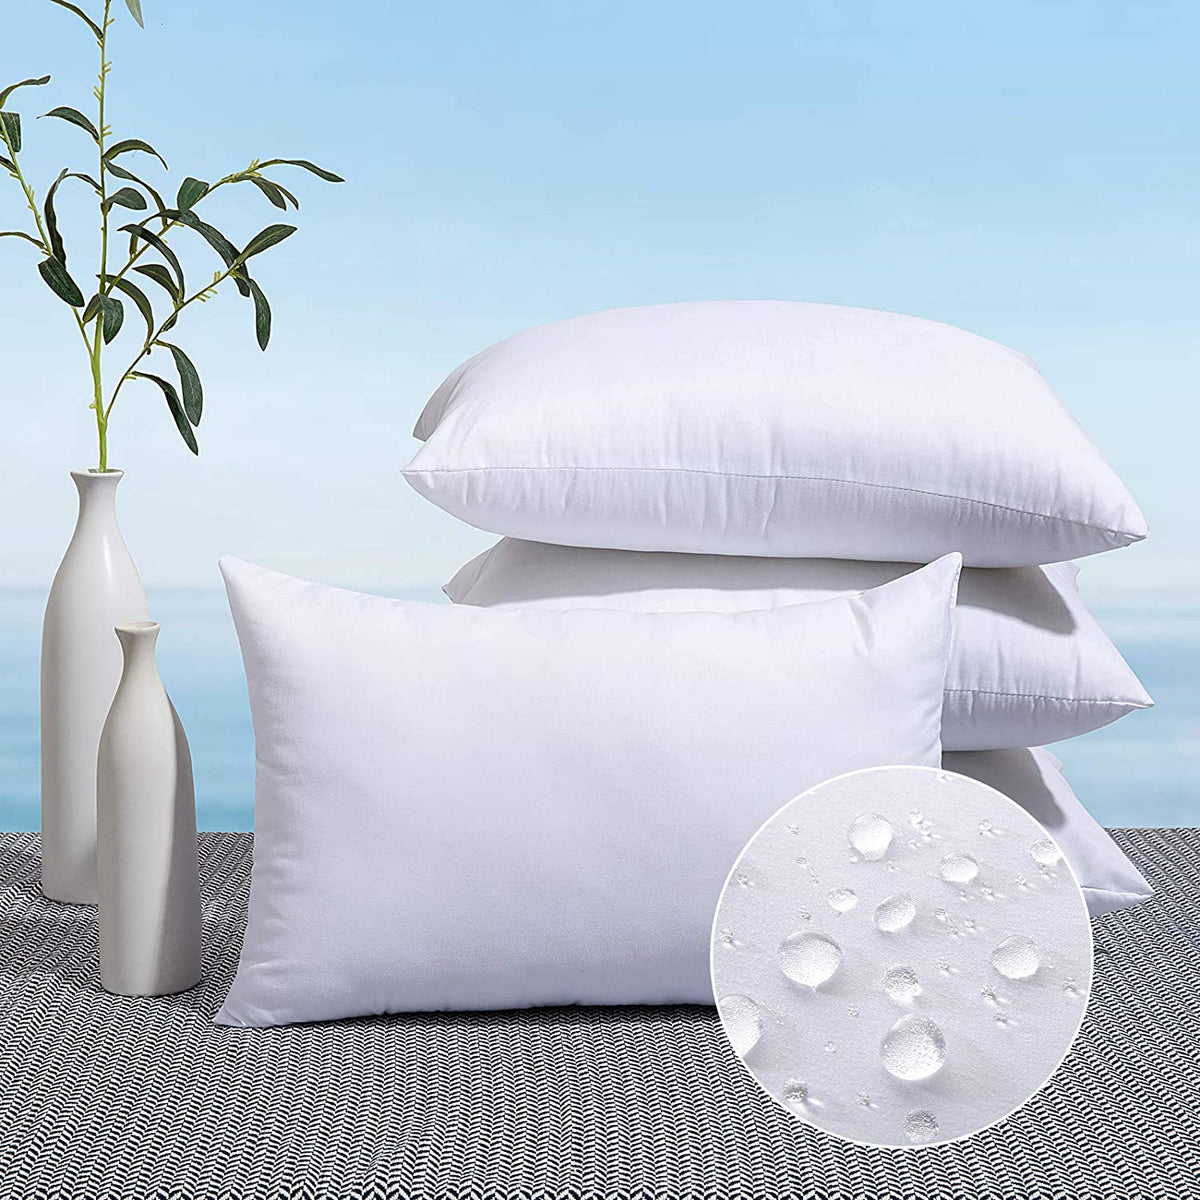 MIULEE 16 x 16 Pillow Inserts (Set of 4) - Decorative Throw Pillows Insert